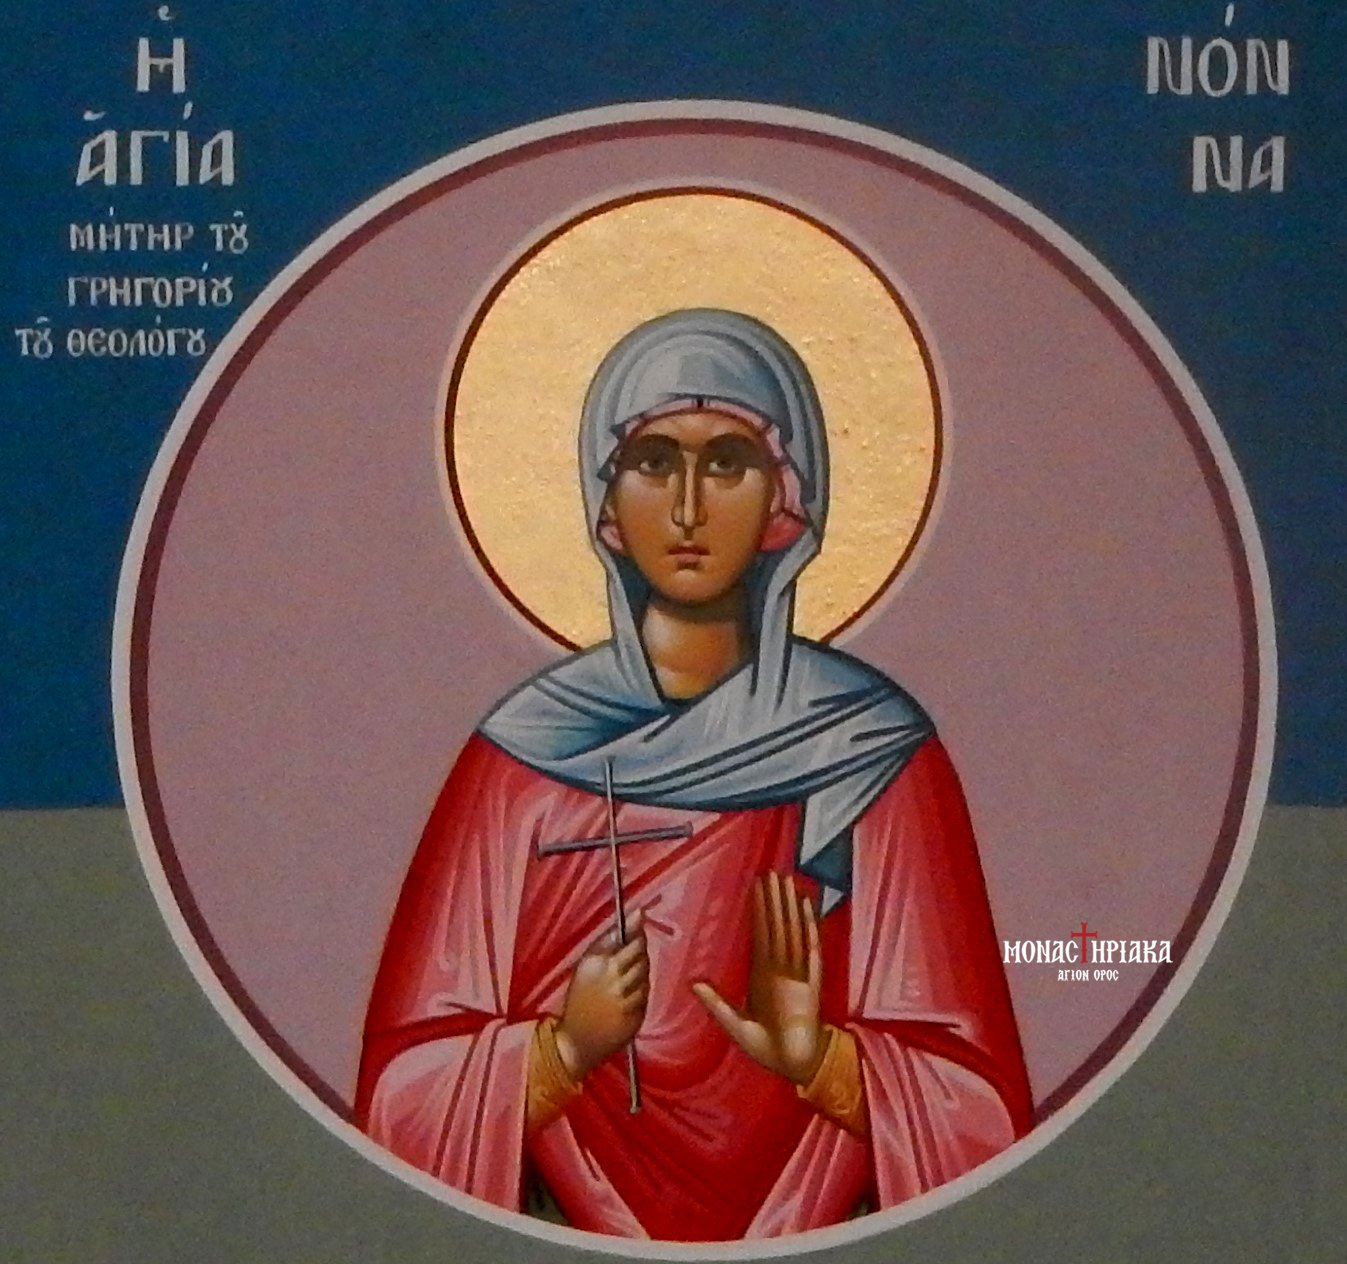 saint nonna mother of saint gregory theologian